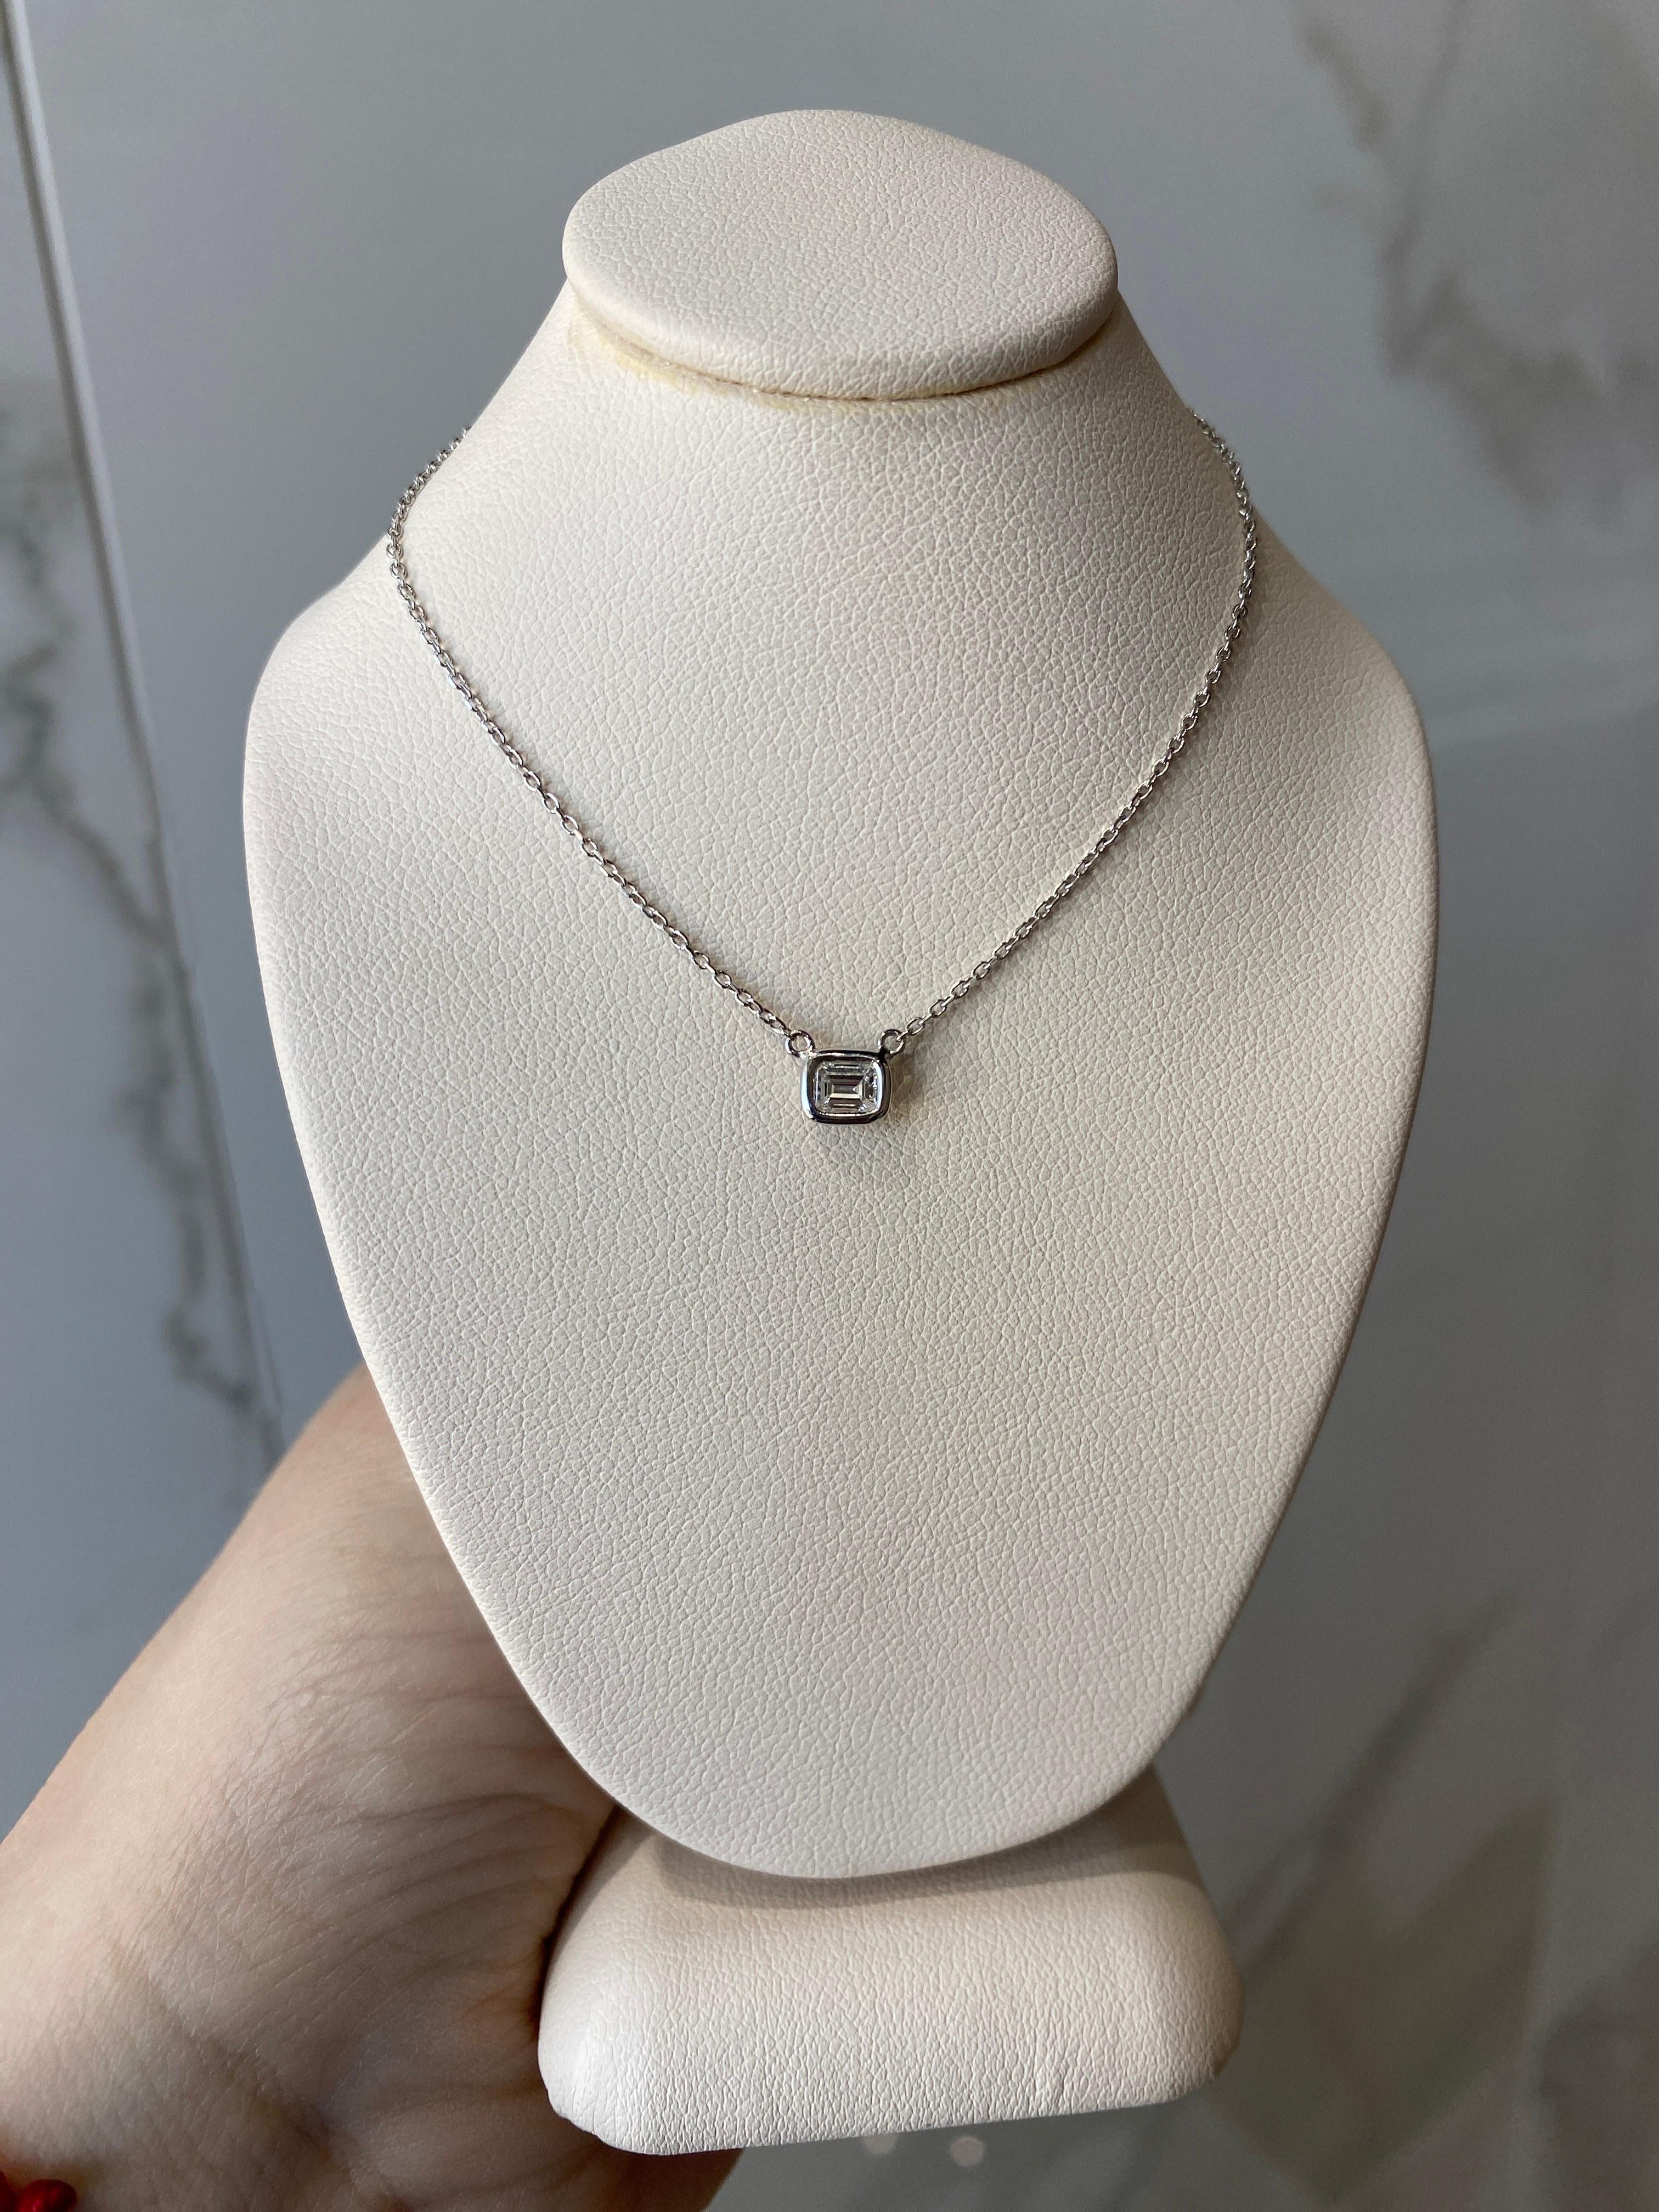 14k White Gold 0.23 Carat Natural Emerald Cut Diamond Pendant Necklace  For Sale 5